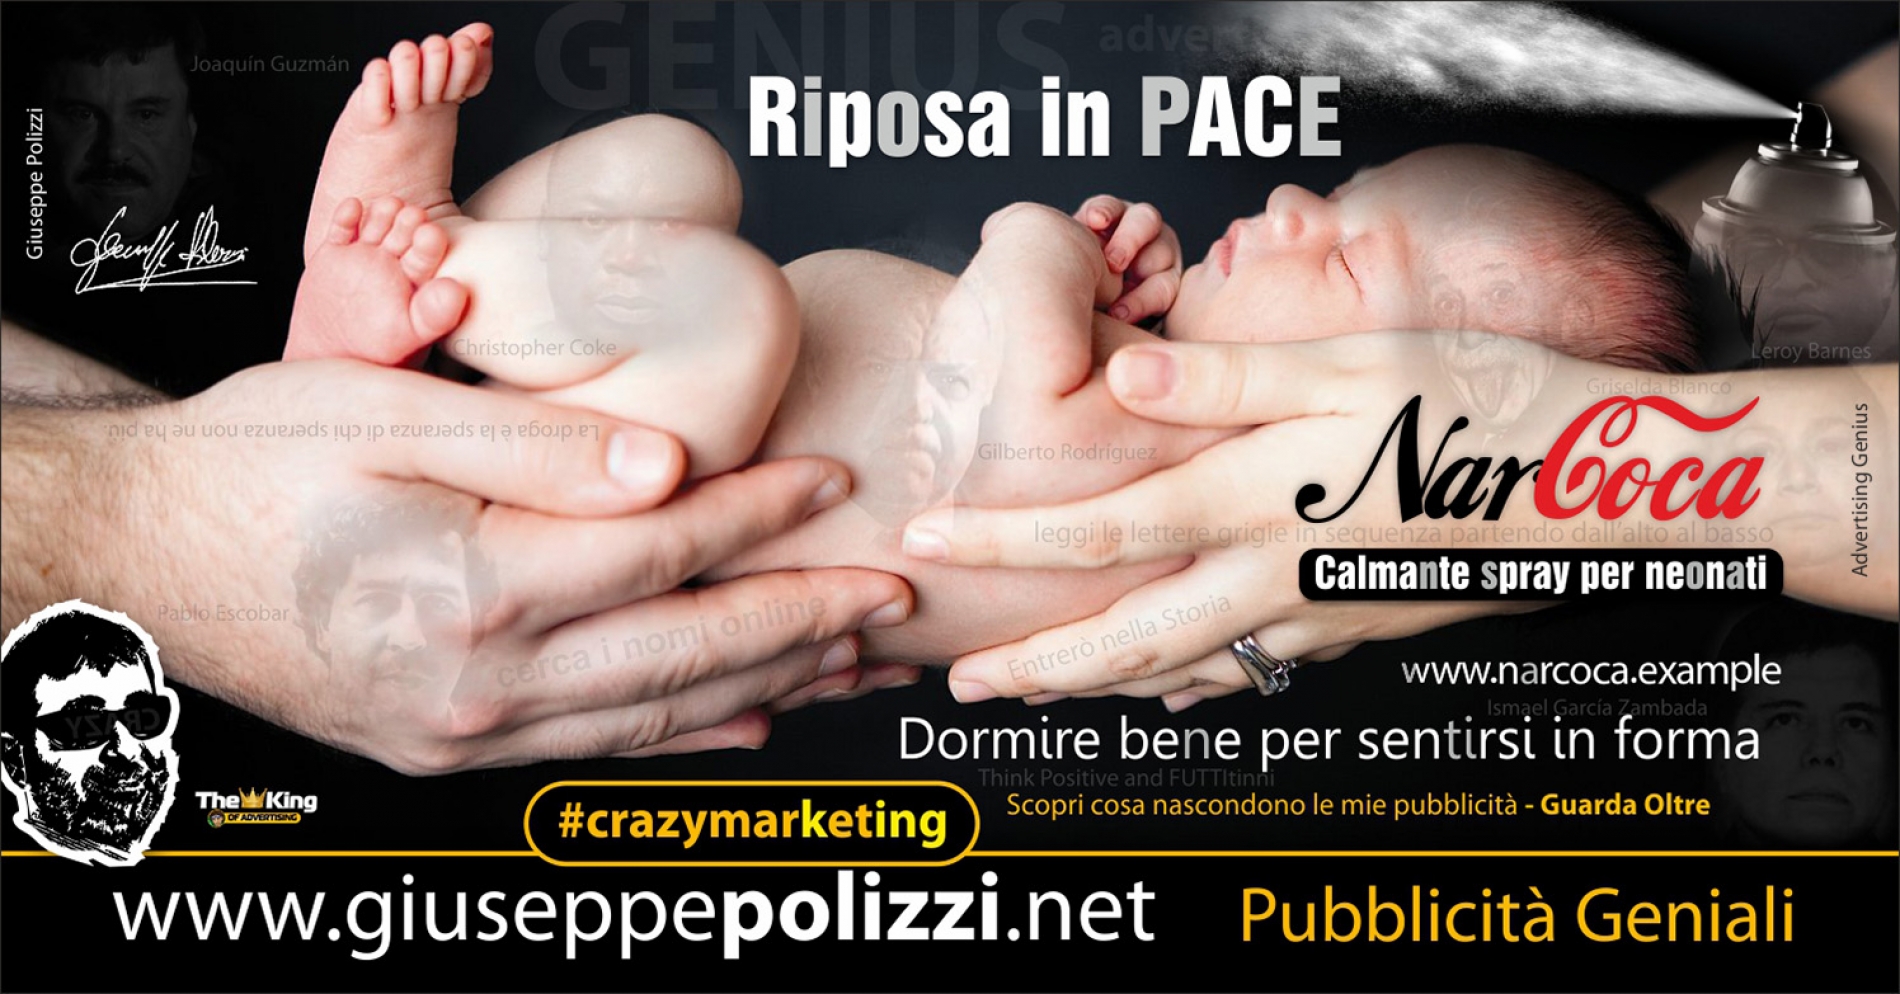 Giuseppe Polizzi crazymarketing Riposa in Pace pubblicità geniali